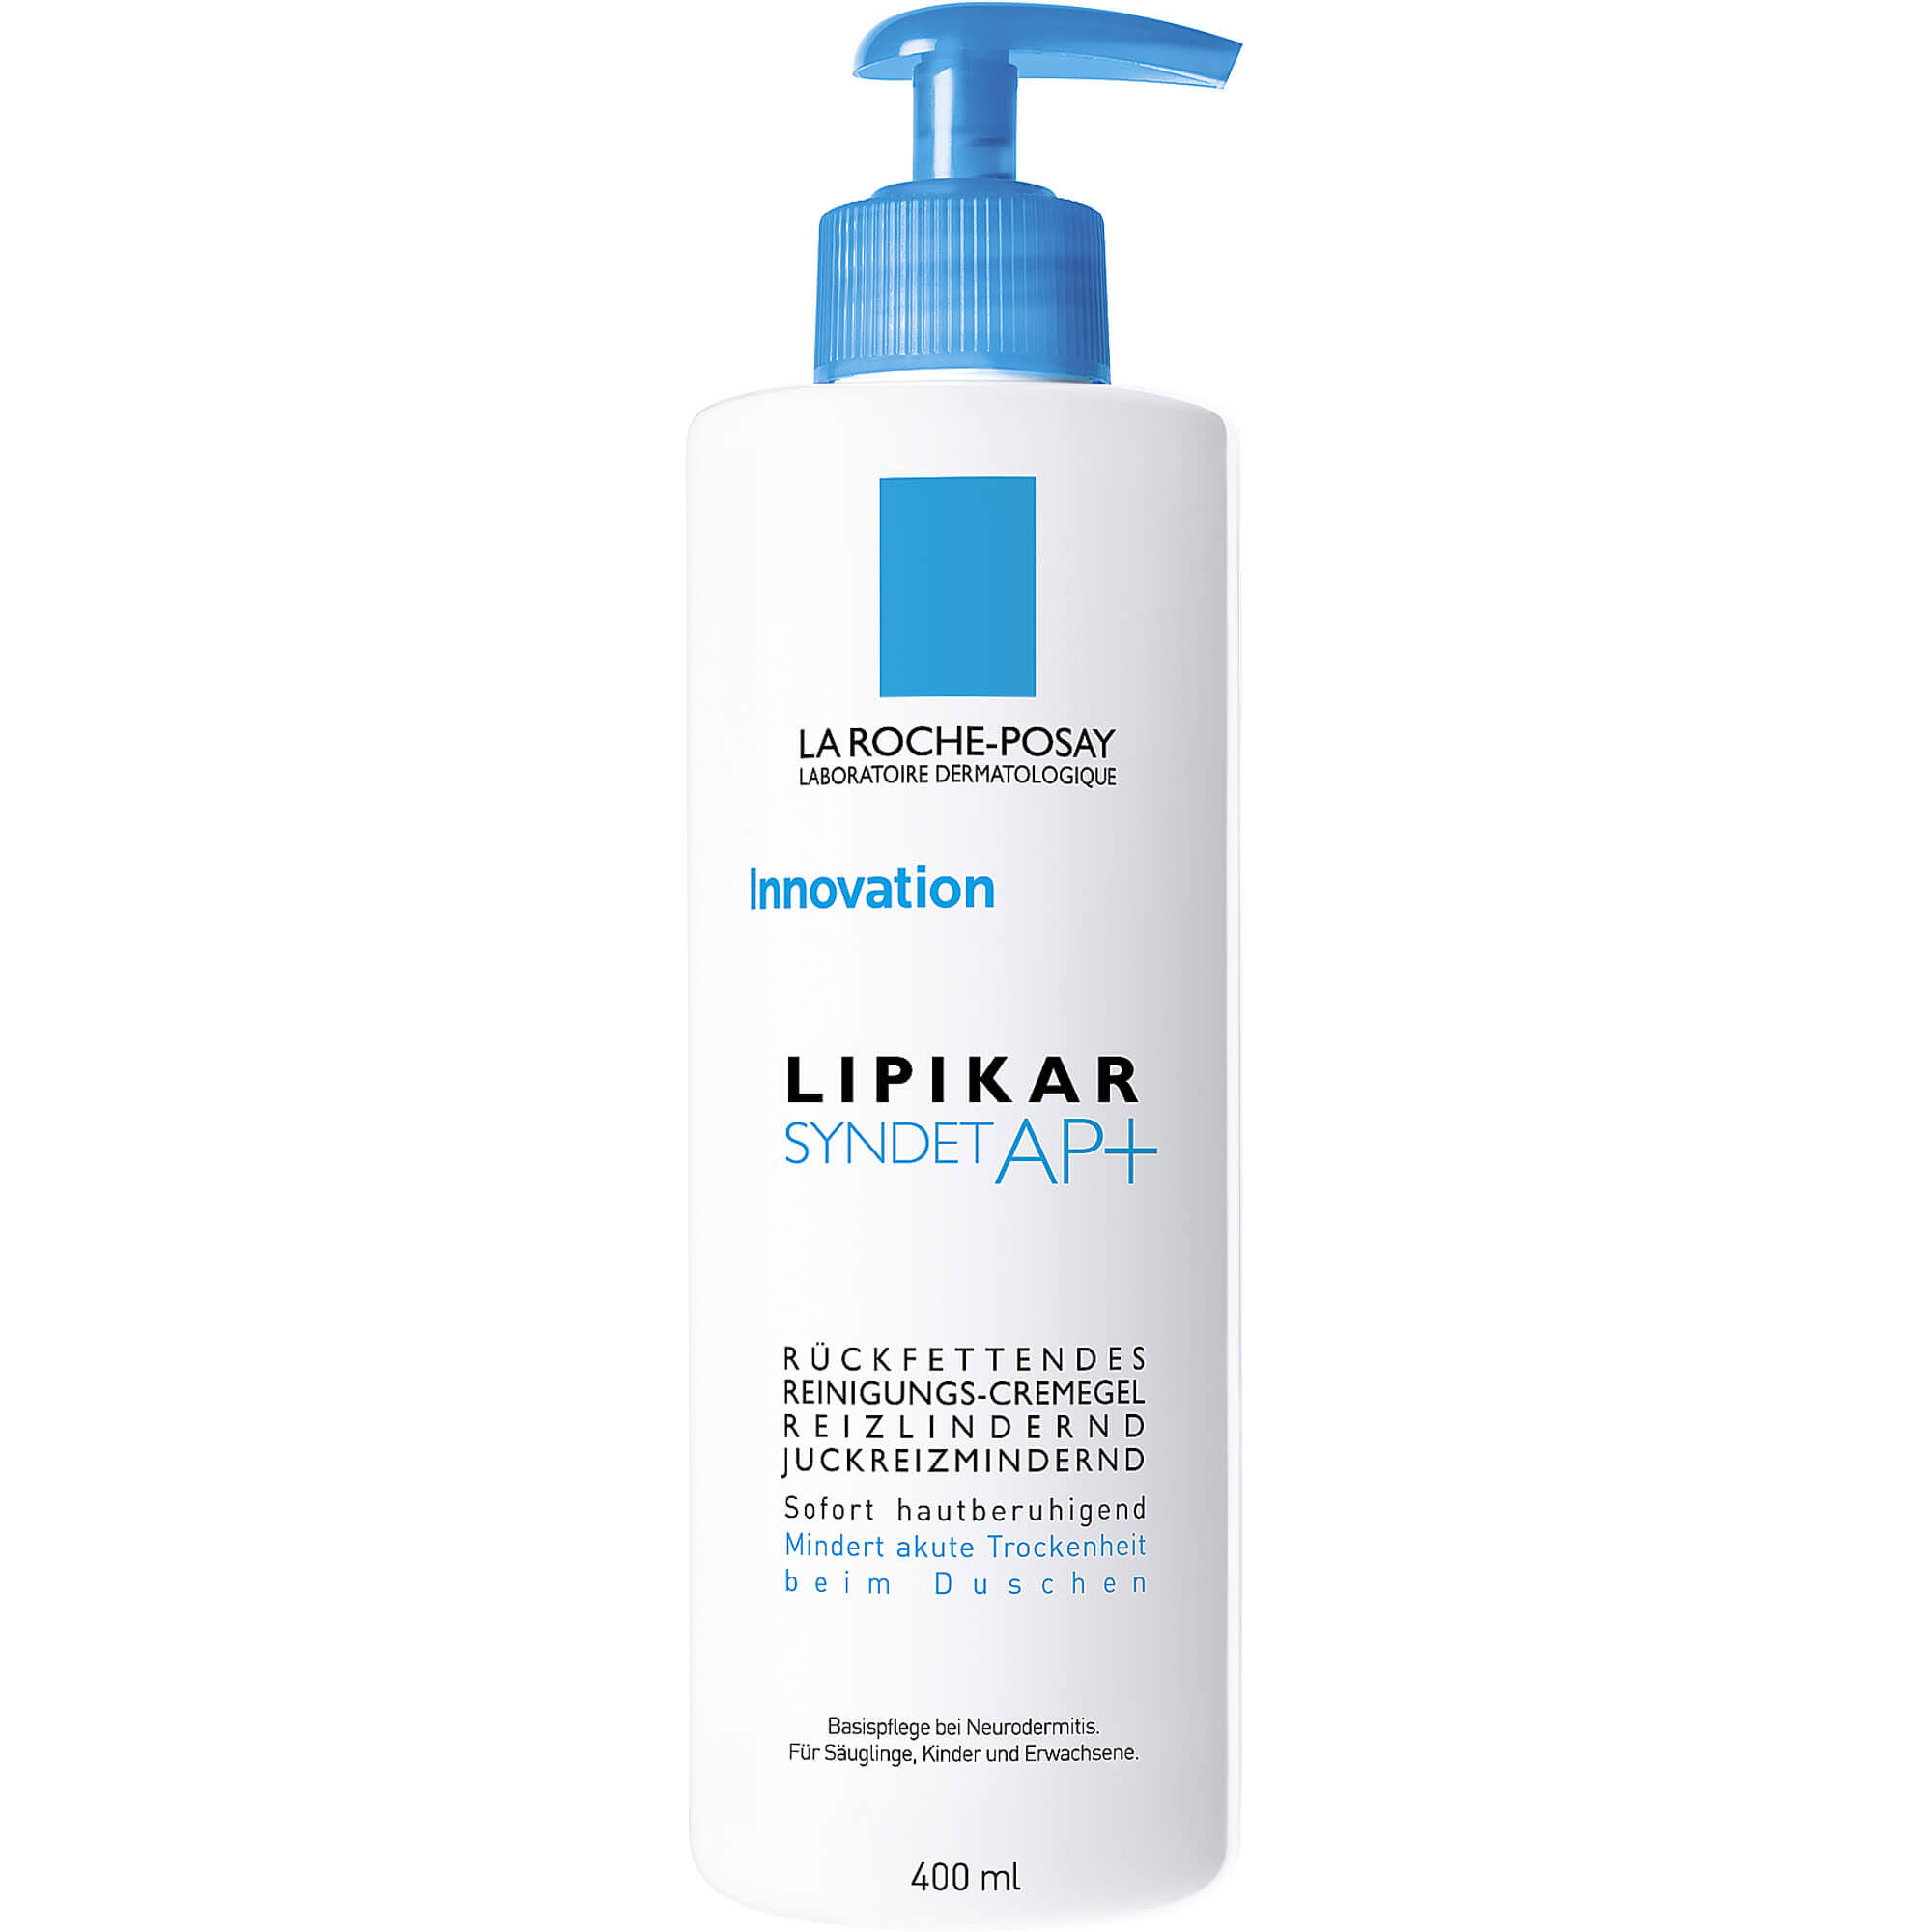 La Roche Posay Lipikar Syndet AP Plus Lipid Replenishing Cream Wash - 400ml